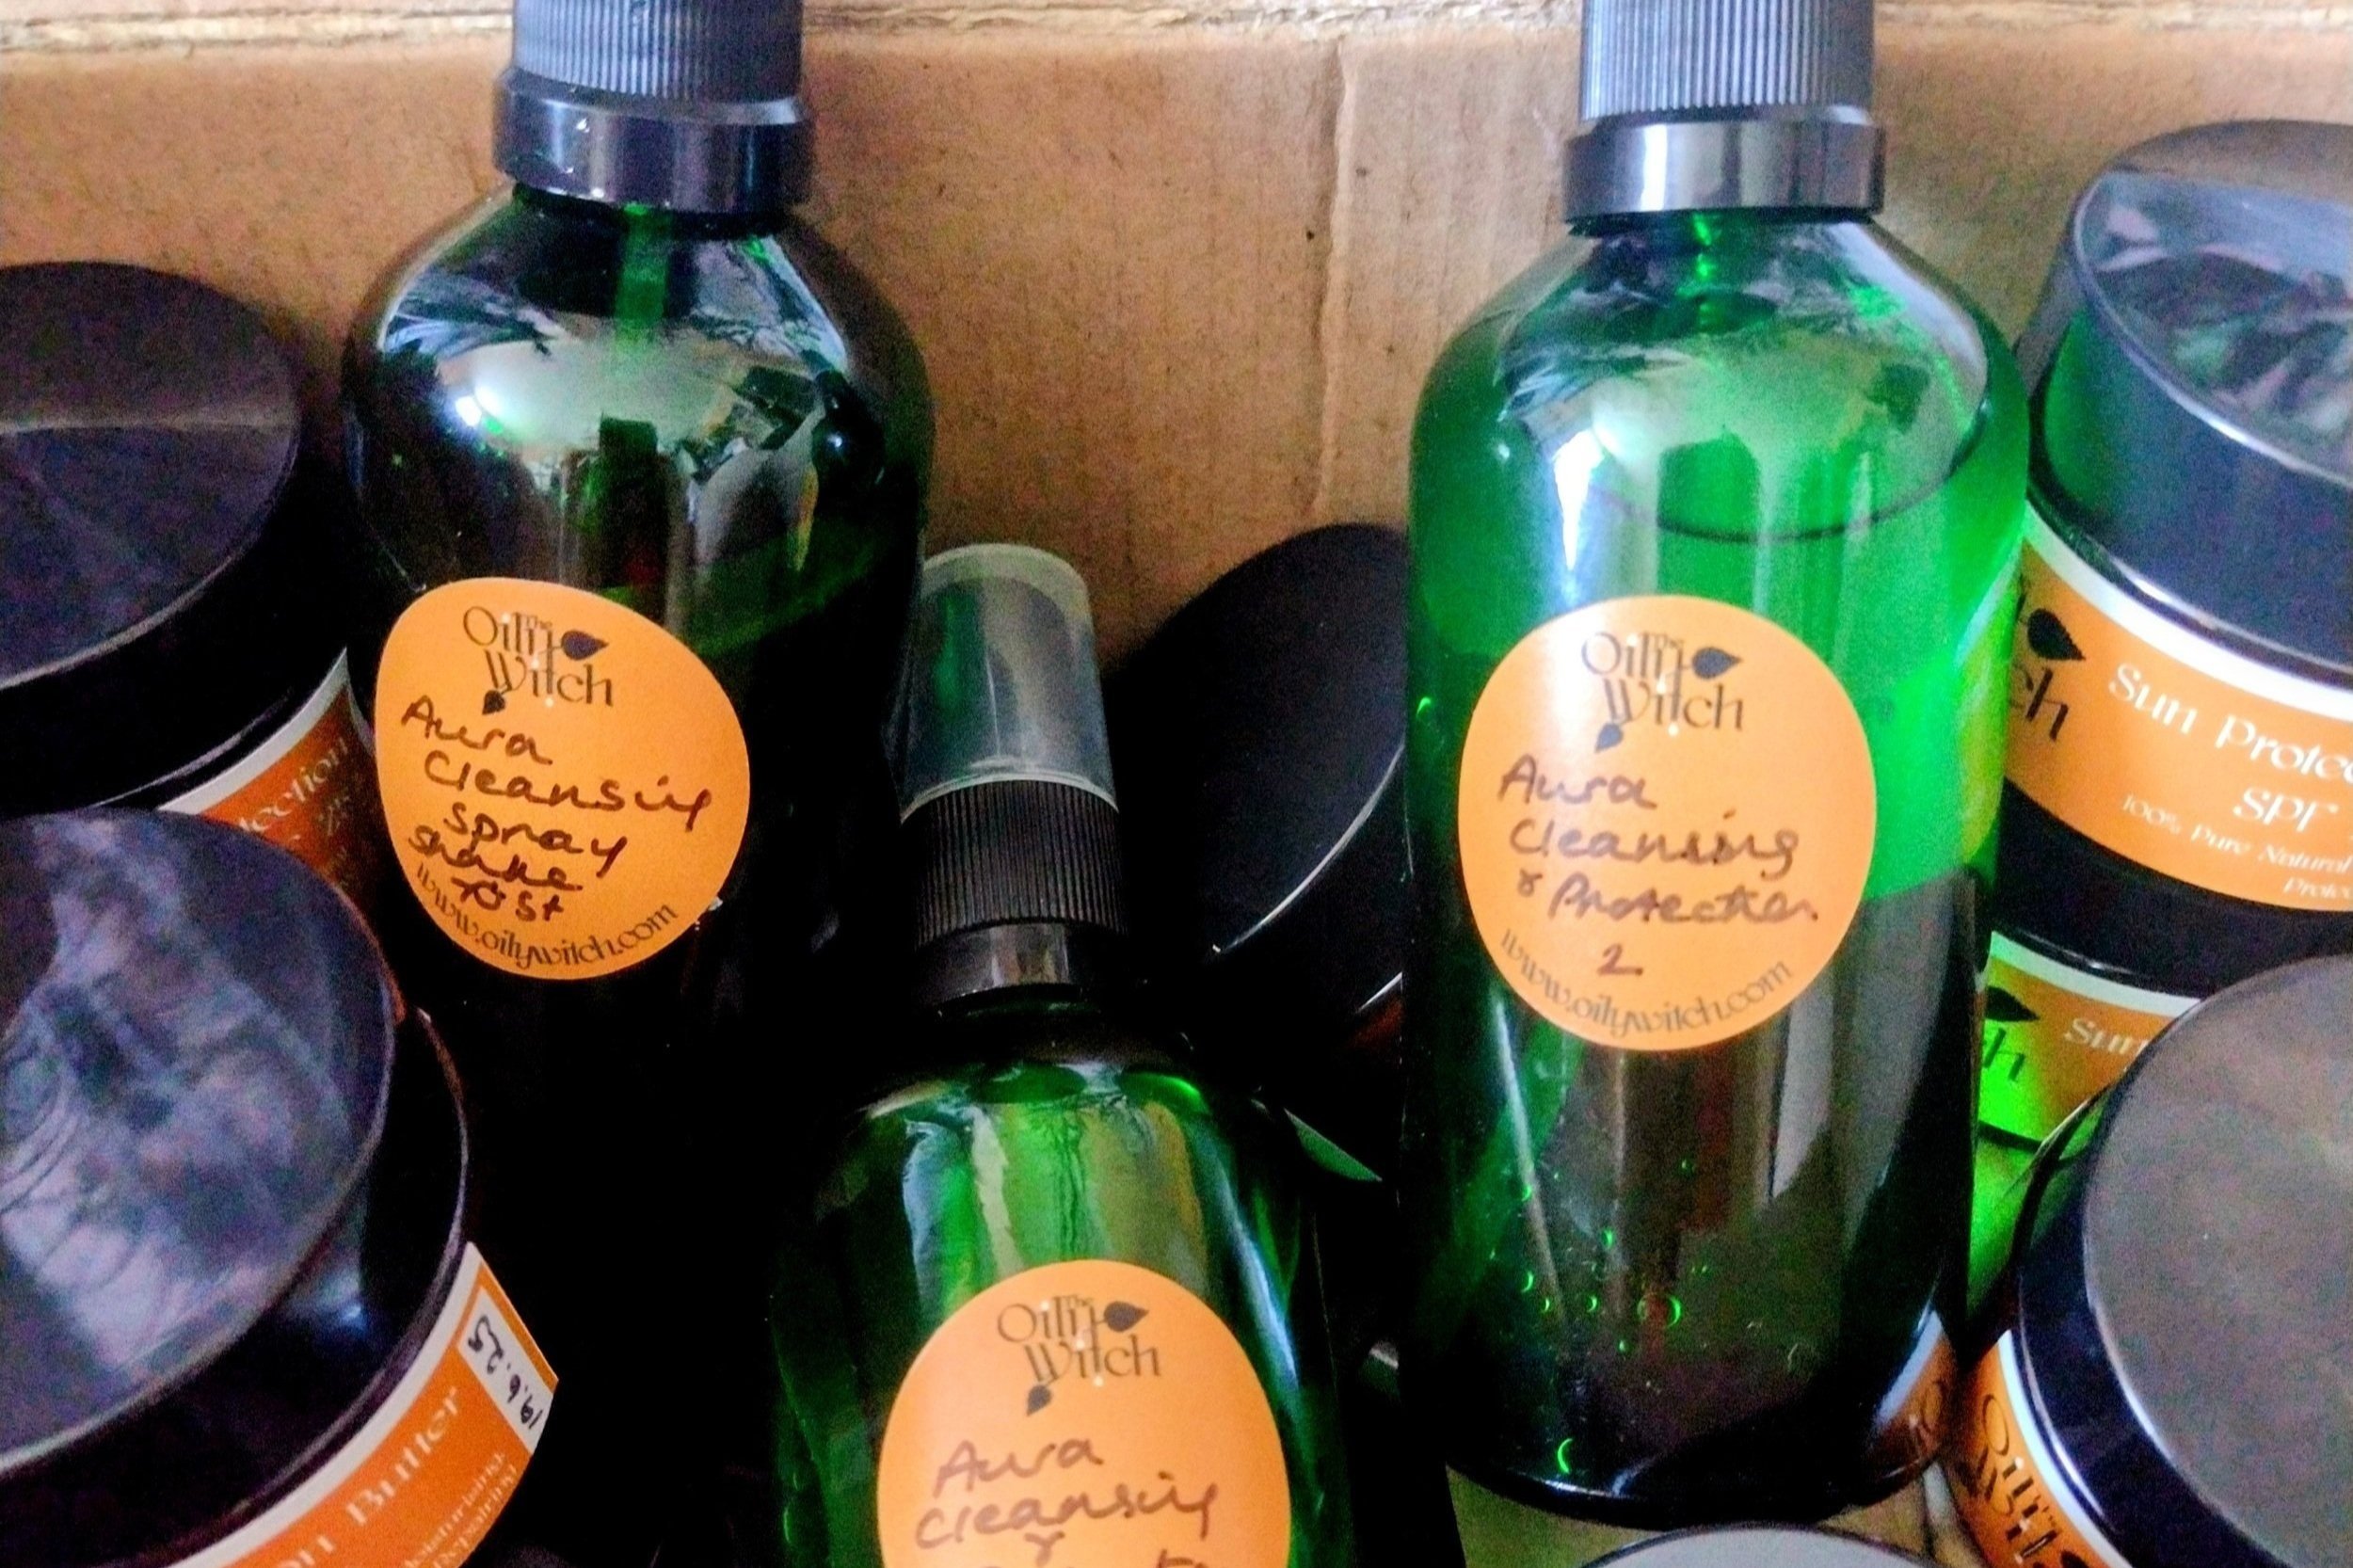 doTERRA Frankincense Essential Oil - Spirit of Health Store